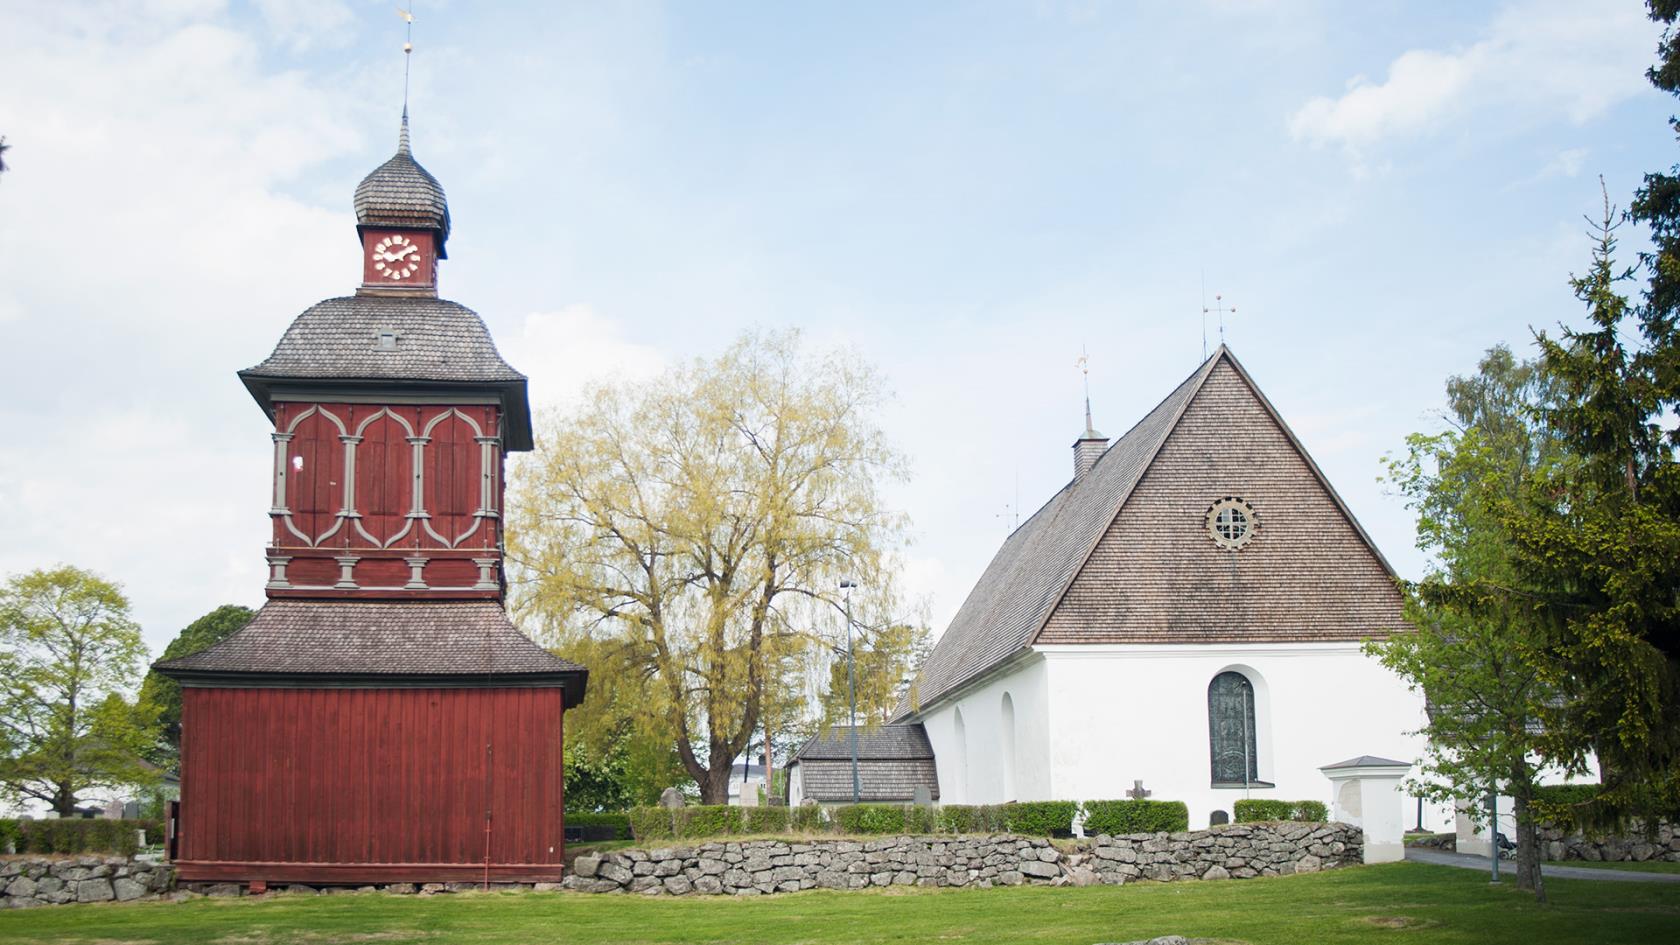 Nordmalings kyrka